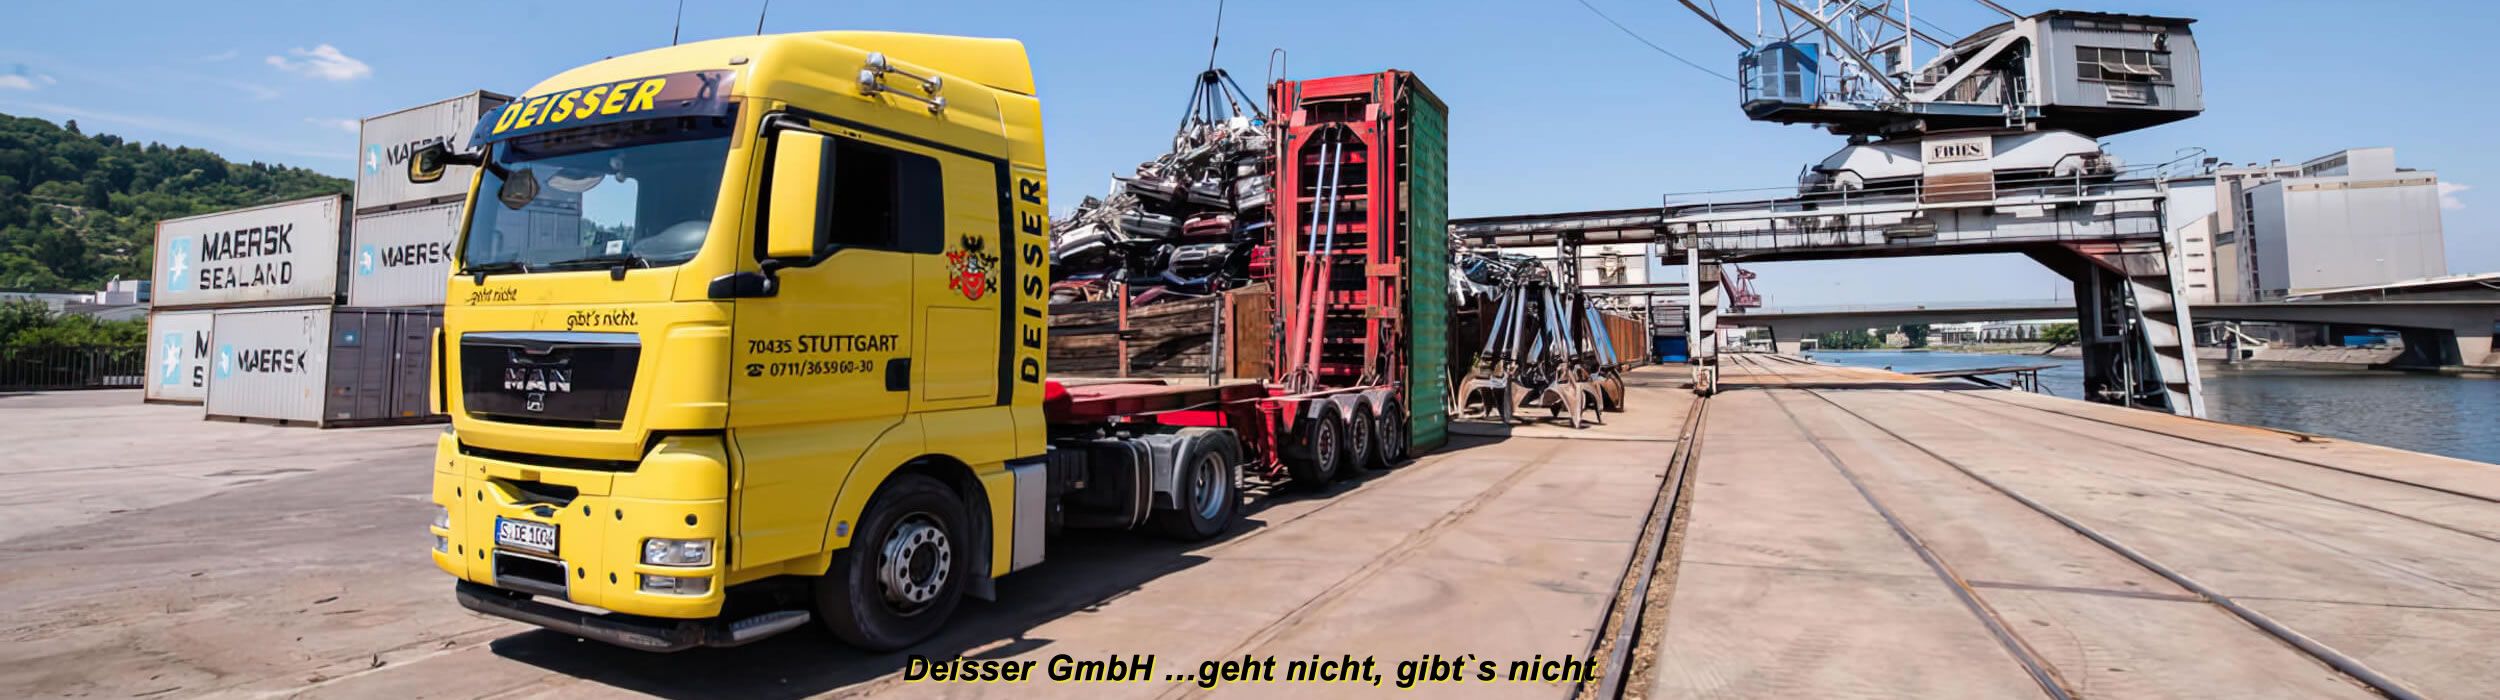 Deisser GmbH / Transportlogistik Seecontainer / Video